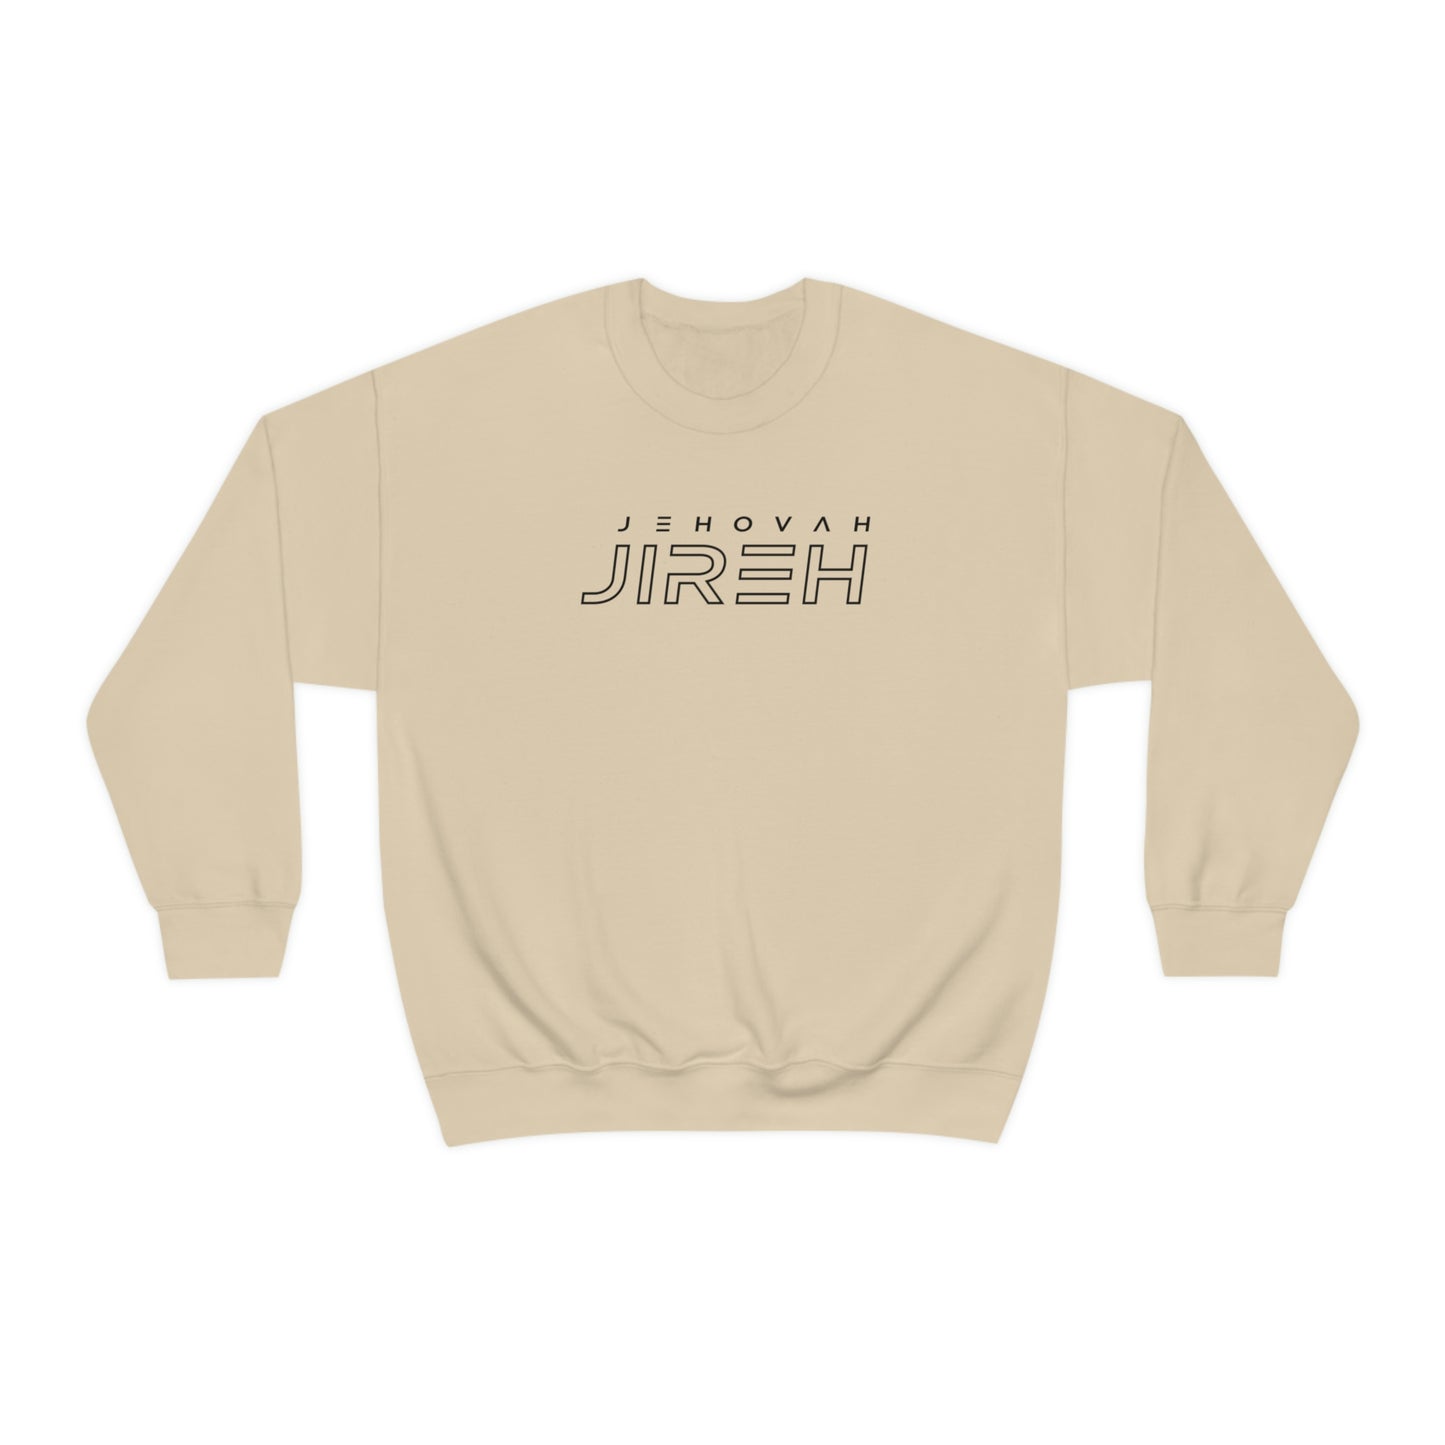 Jehovah Jireh Christian Sweatshirt For Men